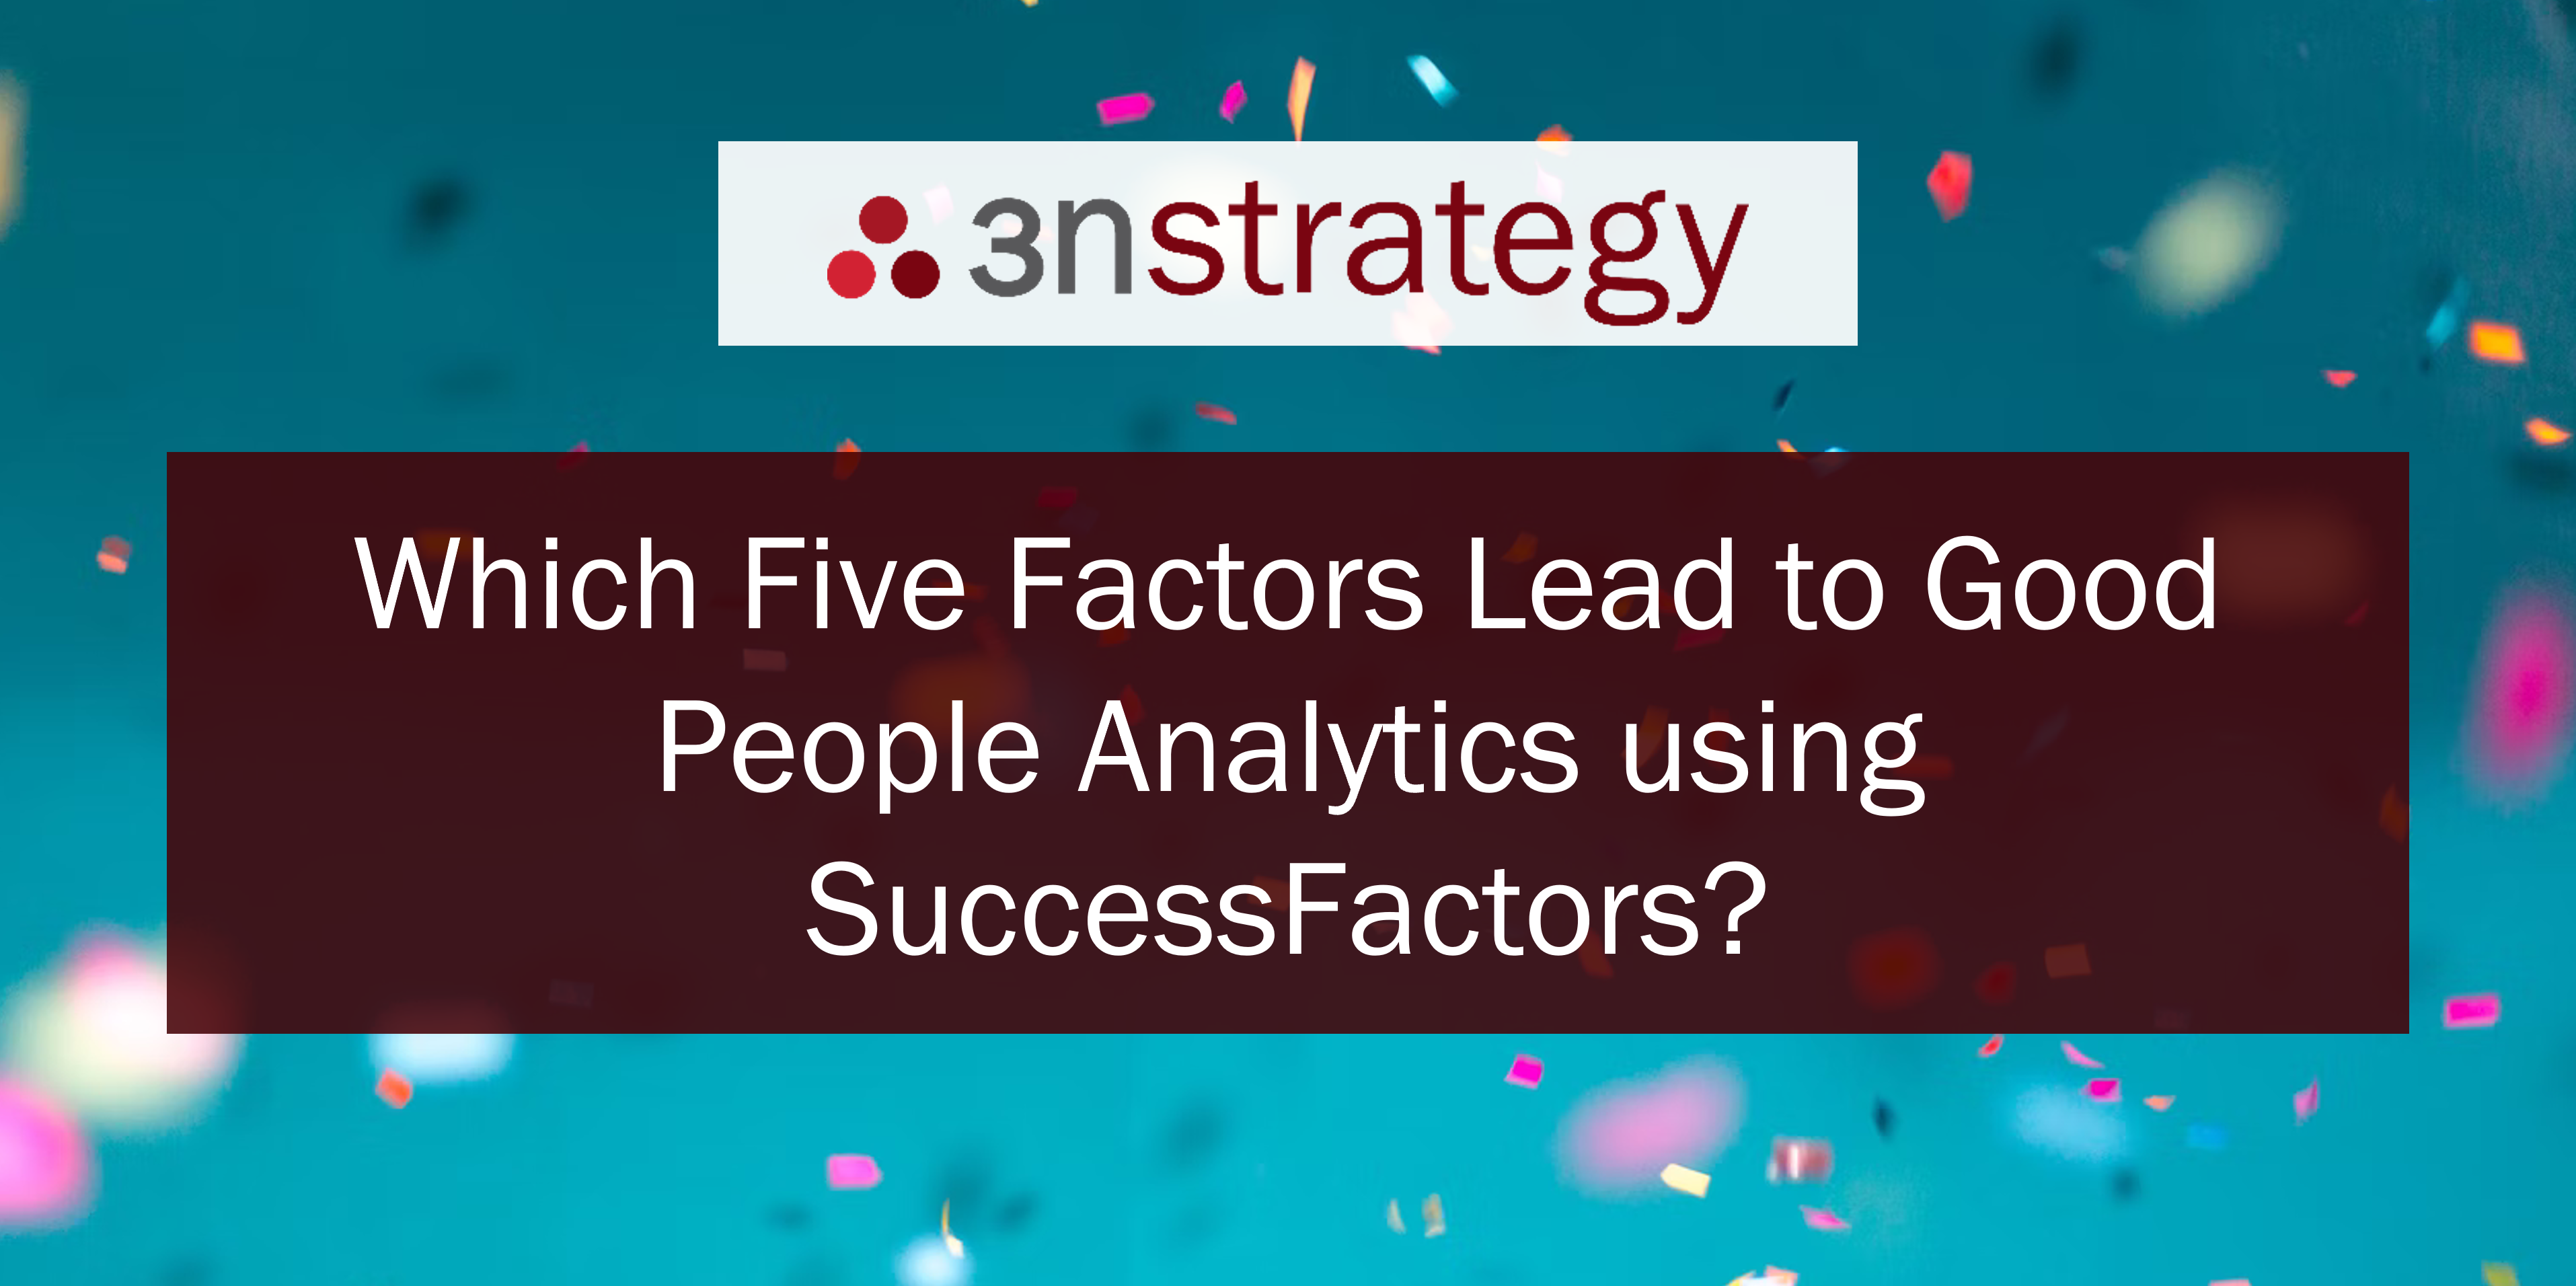 Which Five Factors Lead to Good People Analytics using SuccessFactors?